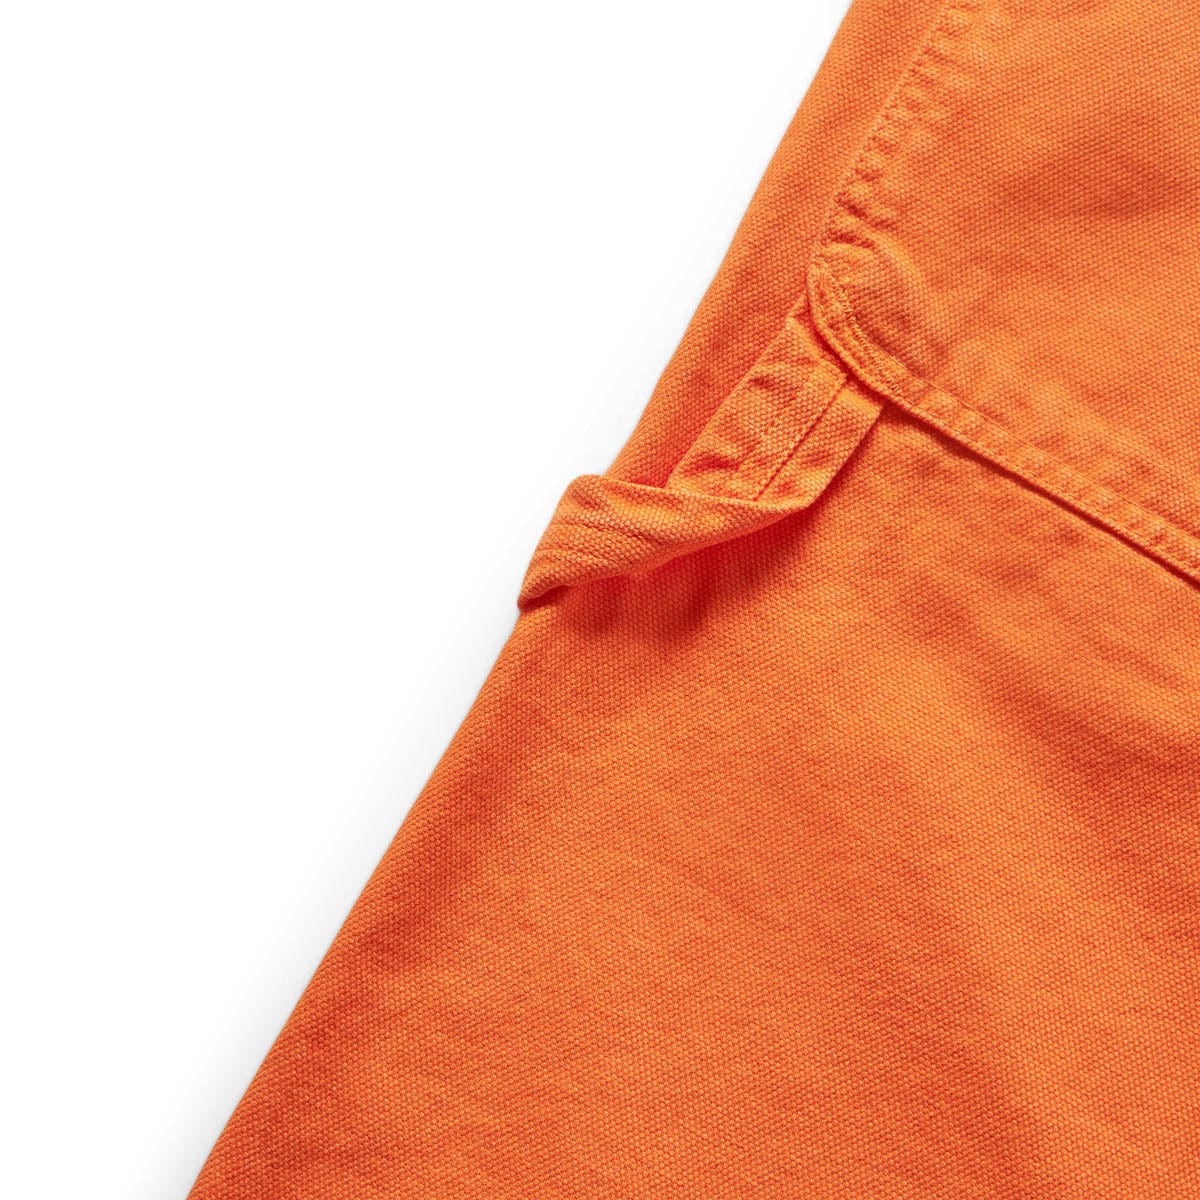 Curling men's summer pants in orange stretch cotton made in France